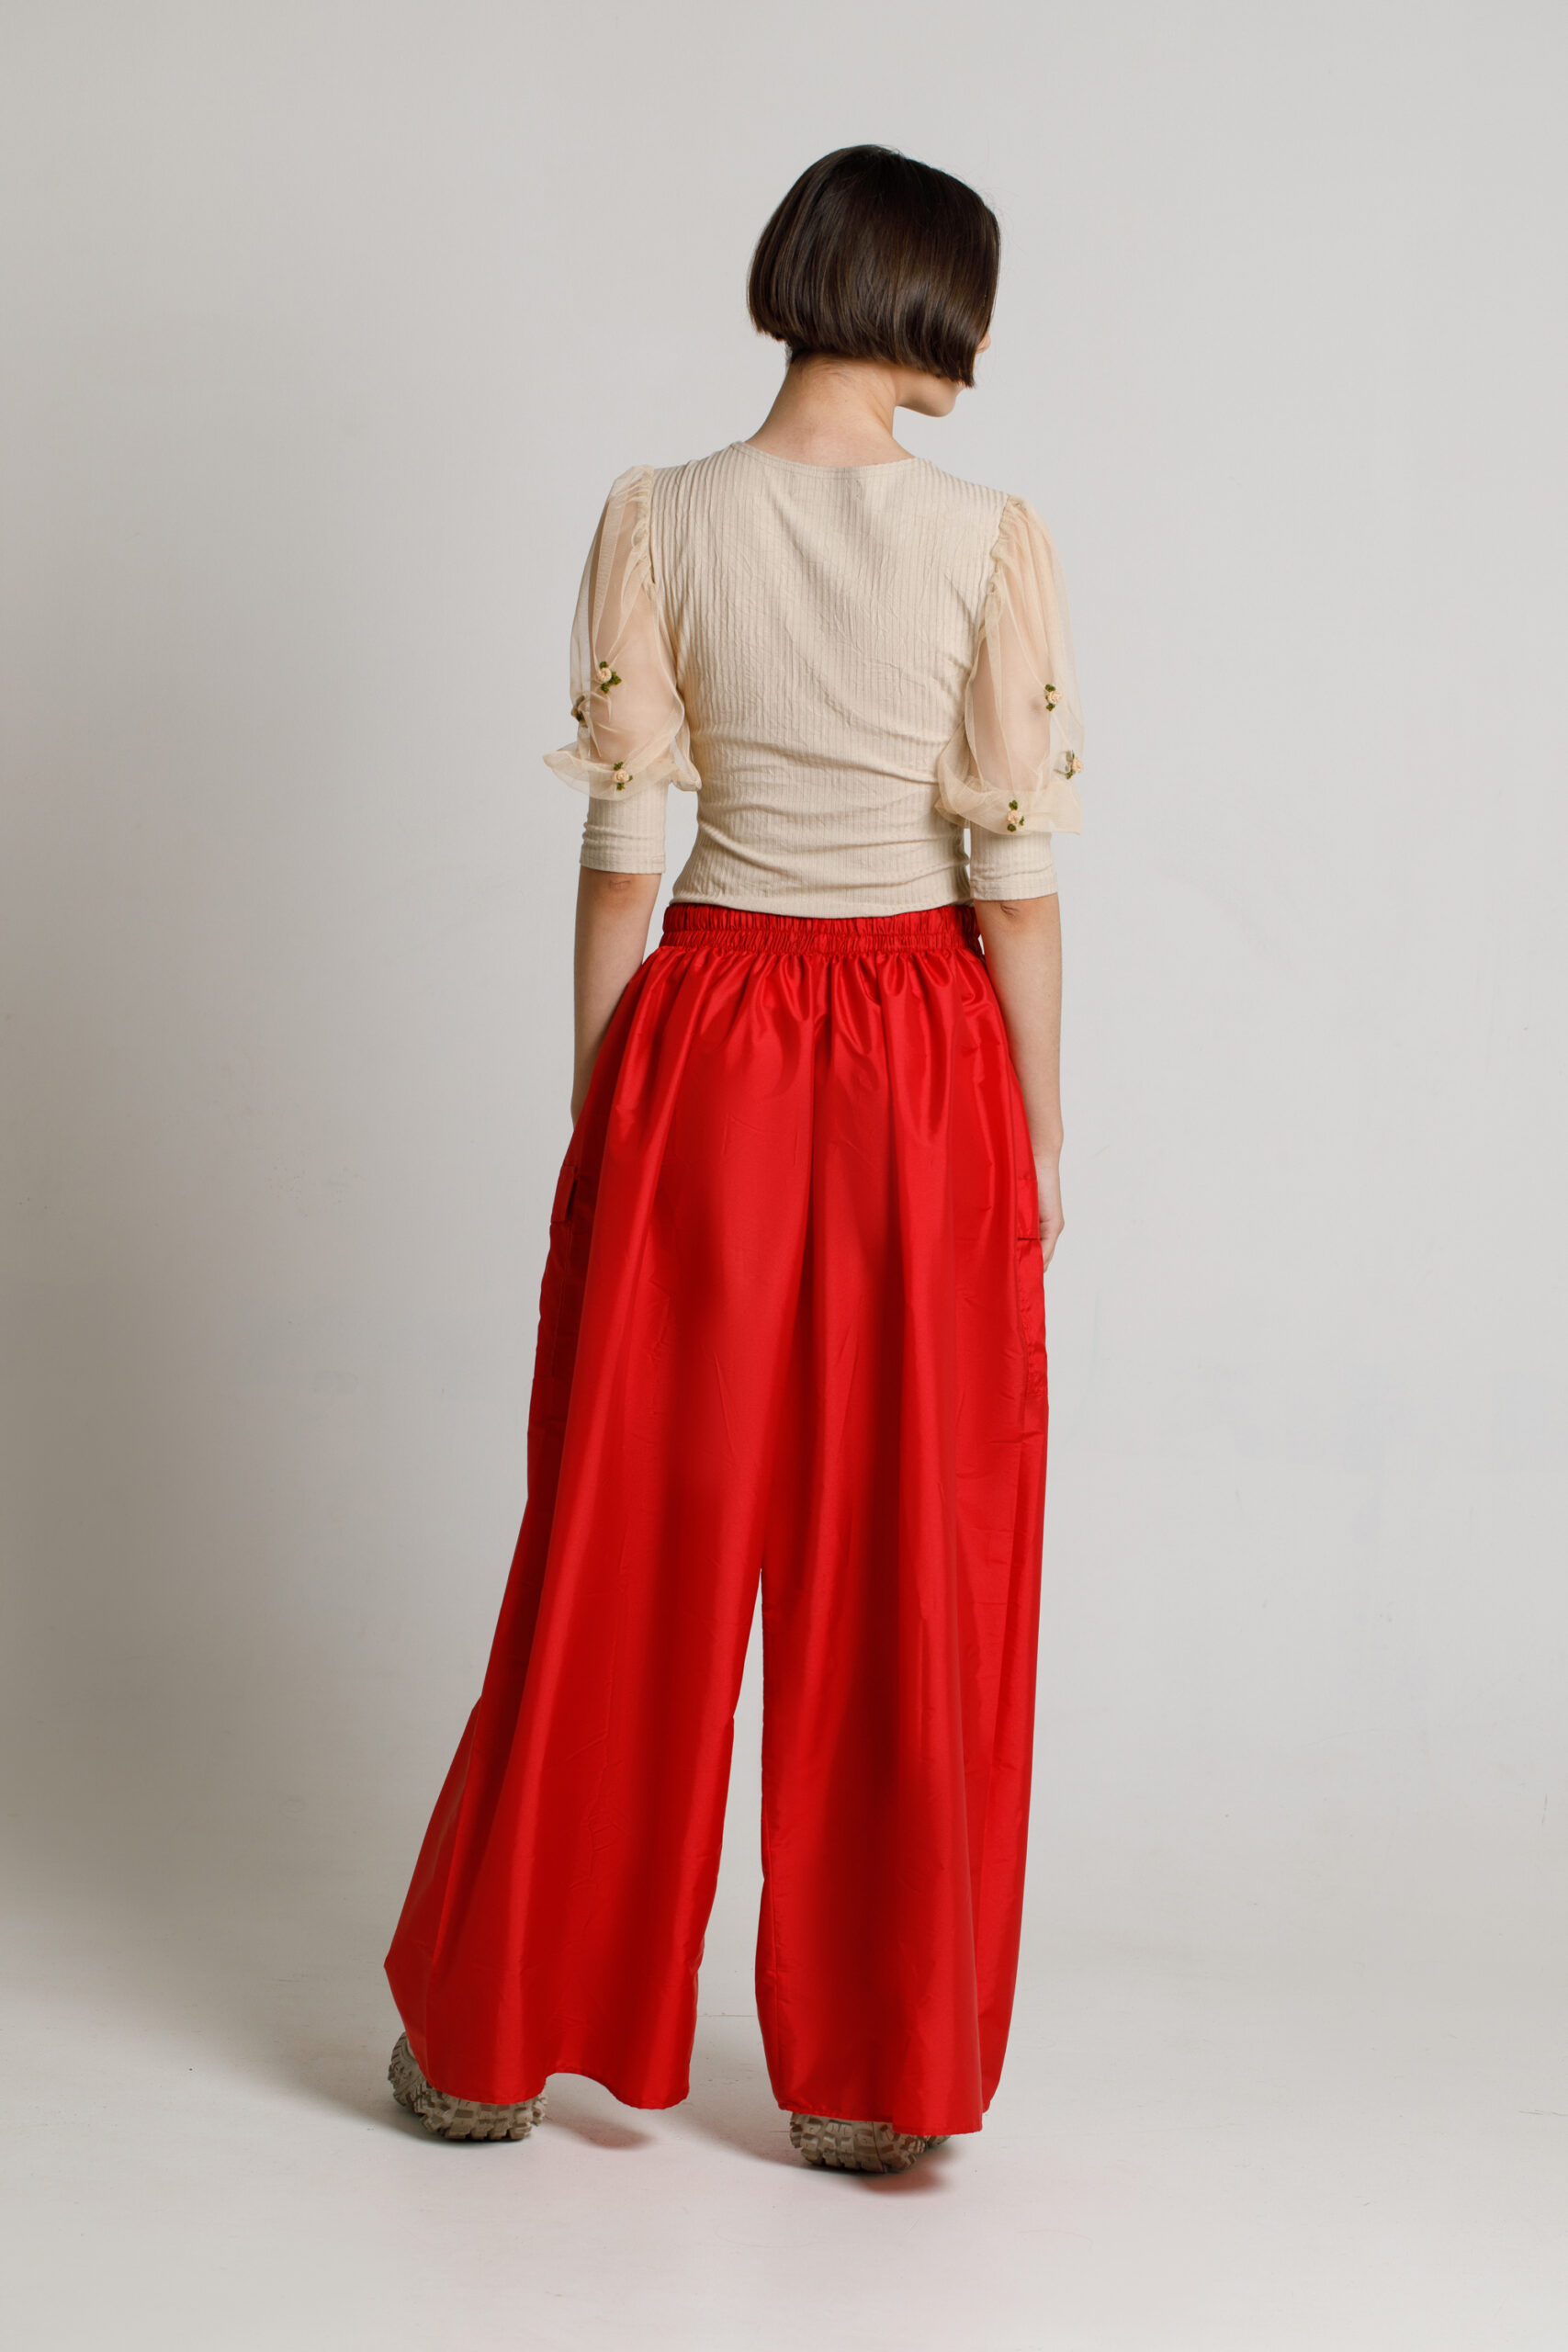 PUFFER casual red mackintosh trousers. Natural fabrics, original design, handmade embroidery